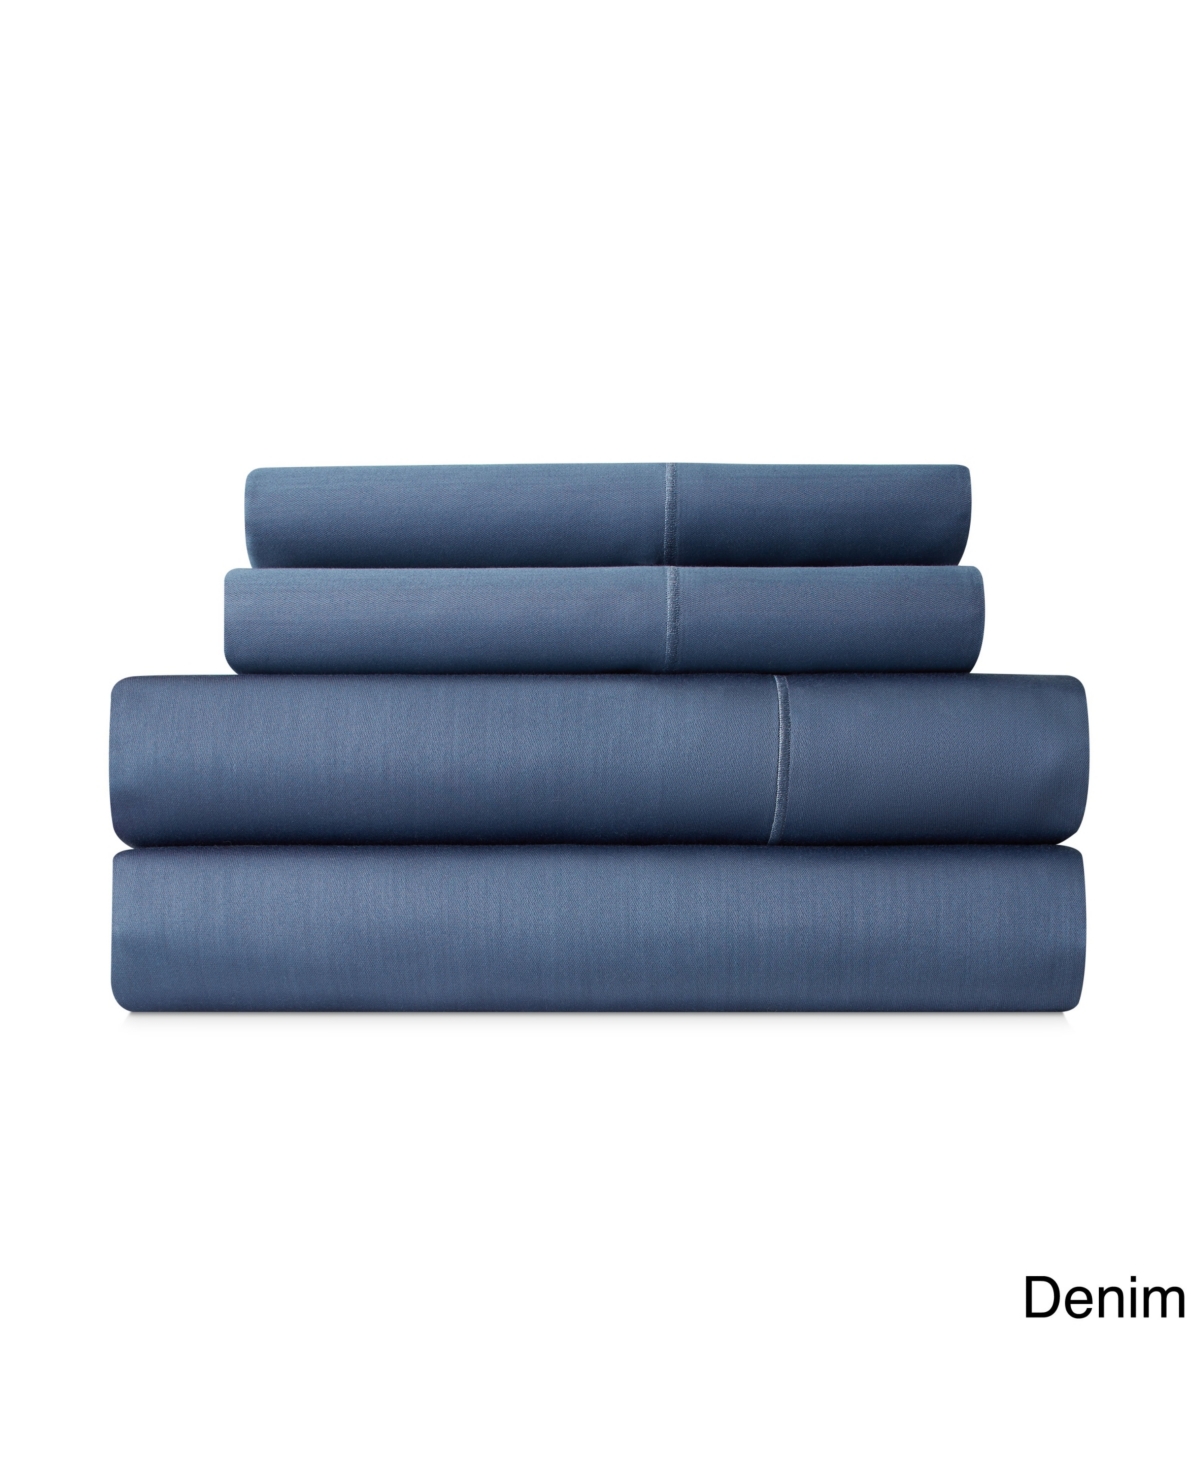 Addy Home Fashions Luxury 1000 Thread Count Cotton Rich Sateen Extra Deep Pocket Queen 4-piece Sheet Set Bedding In Denim